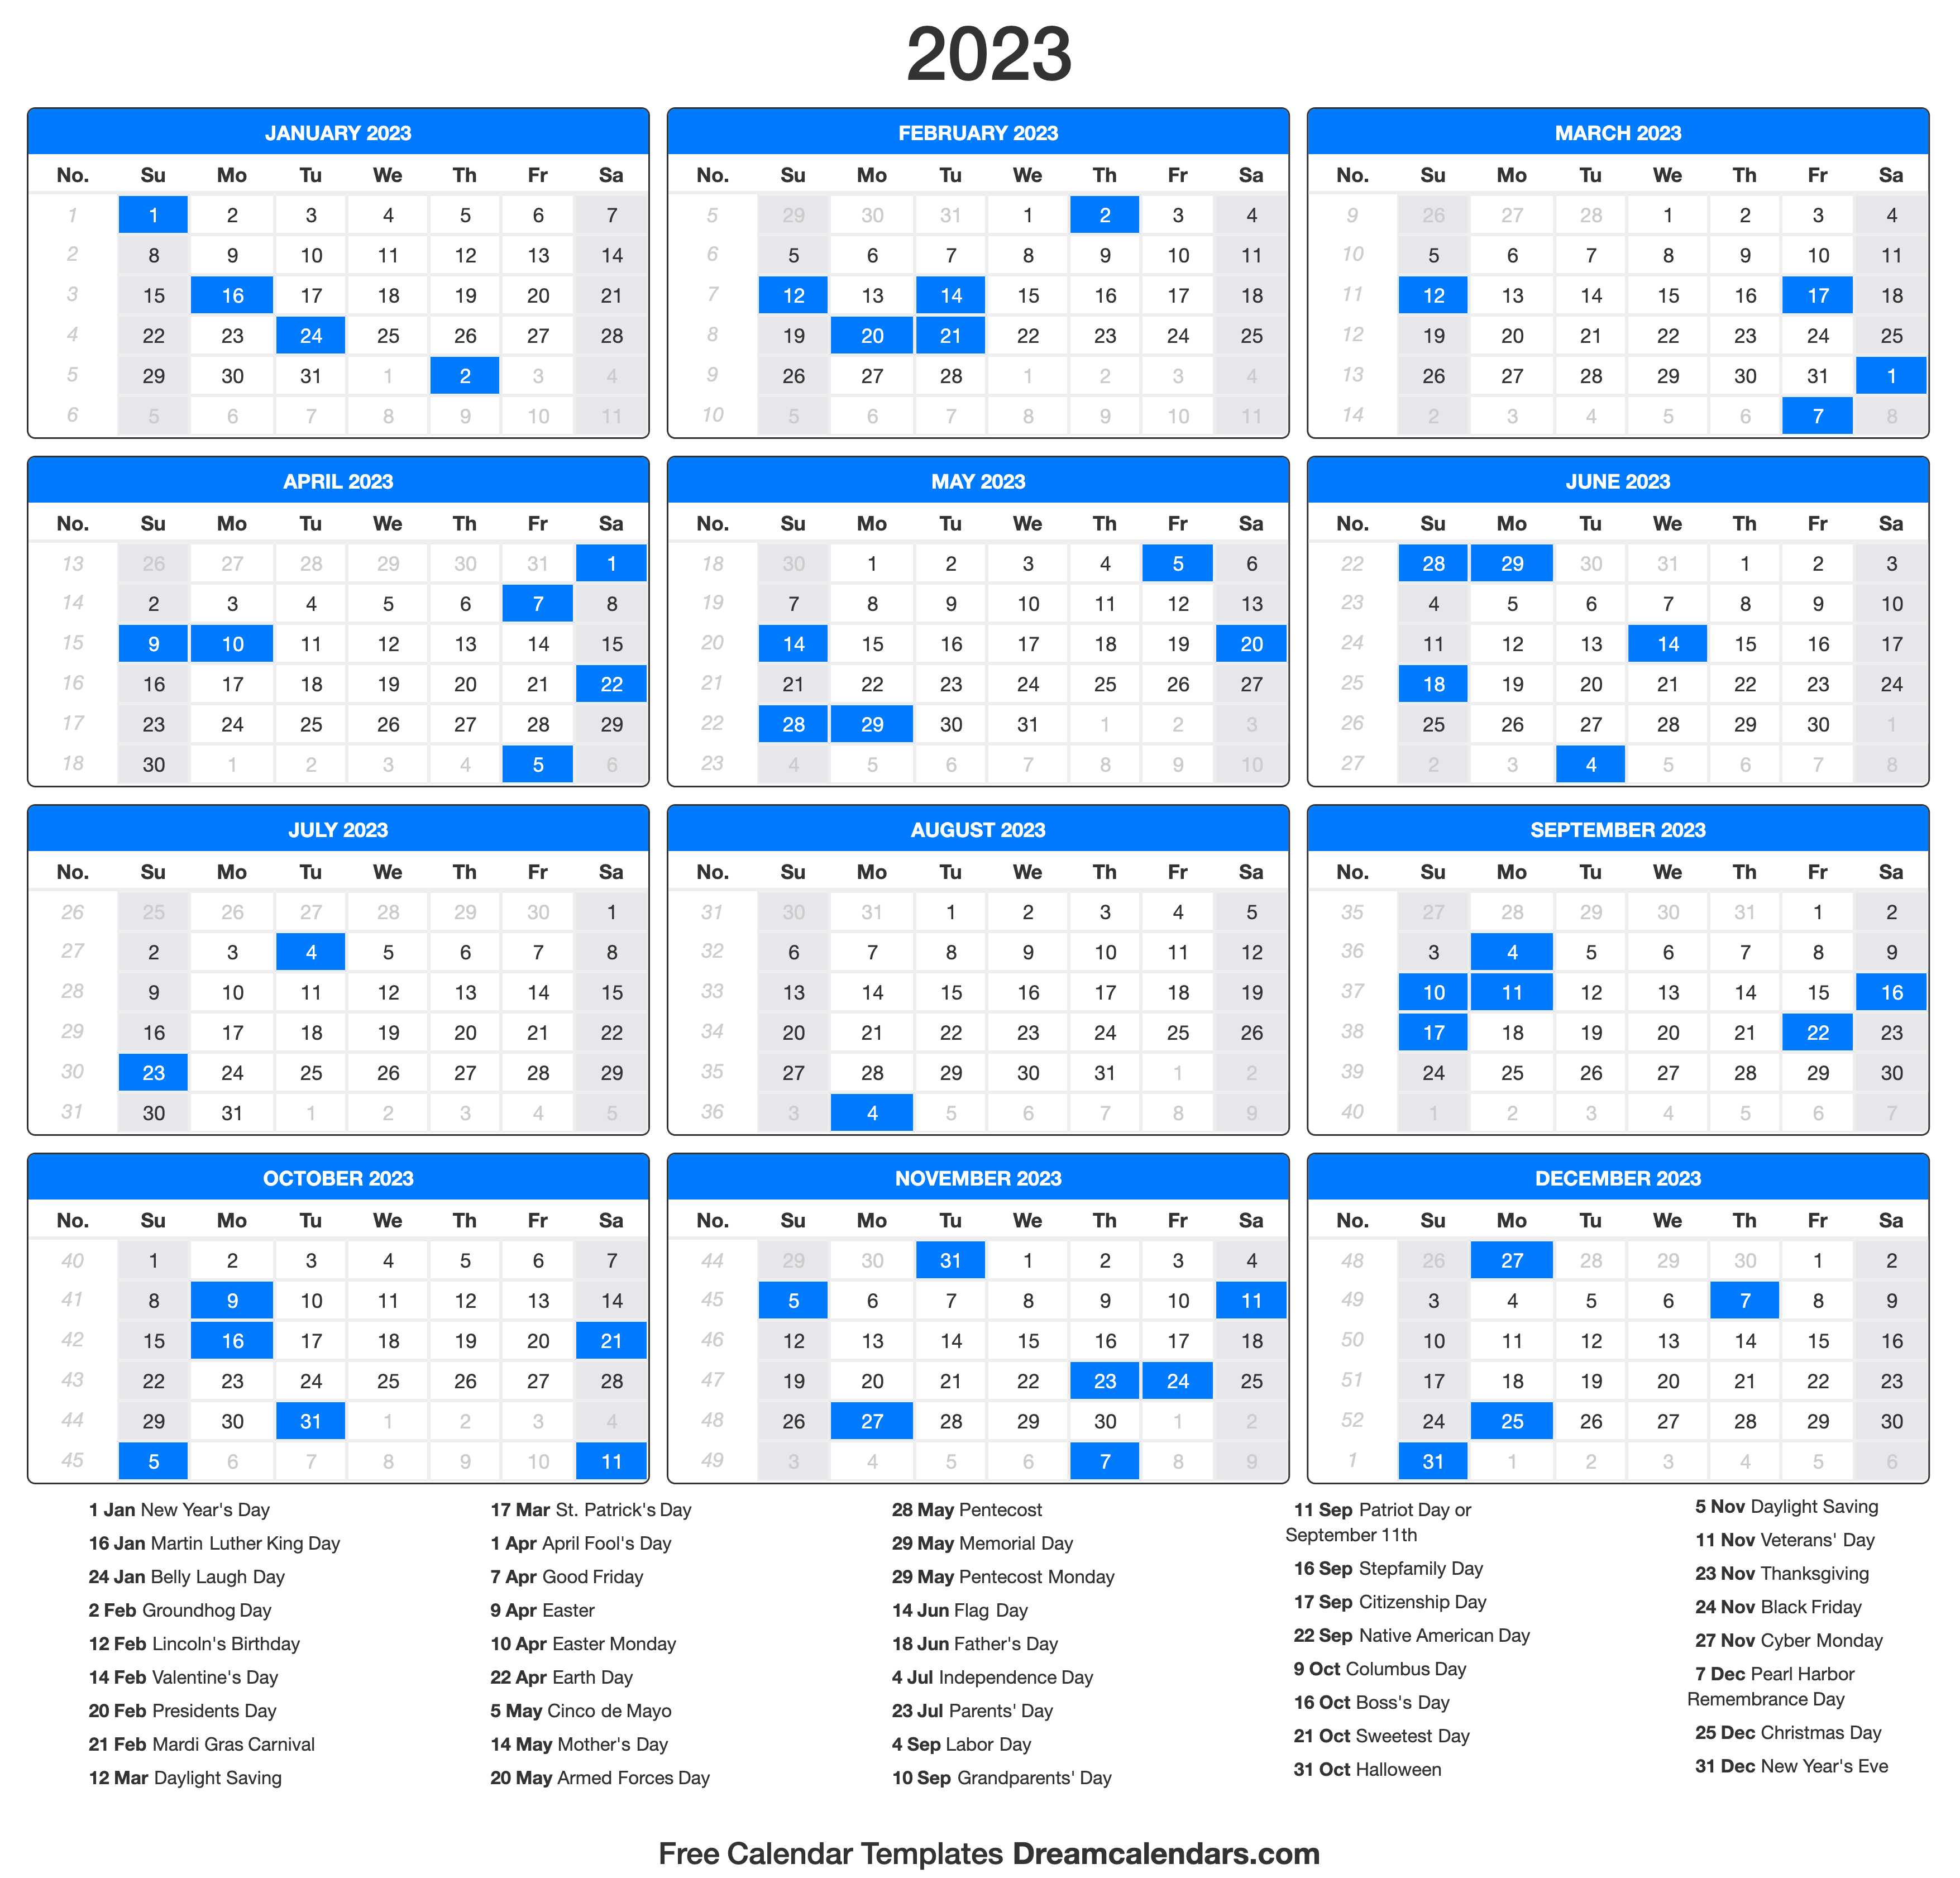 Tufts 2022 2023 Calendar 2023 Calendar